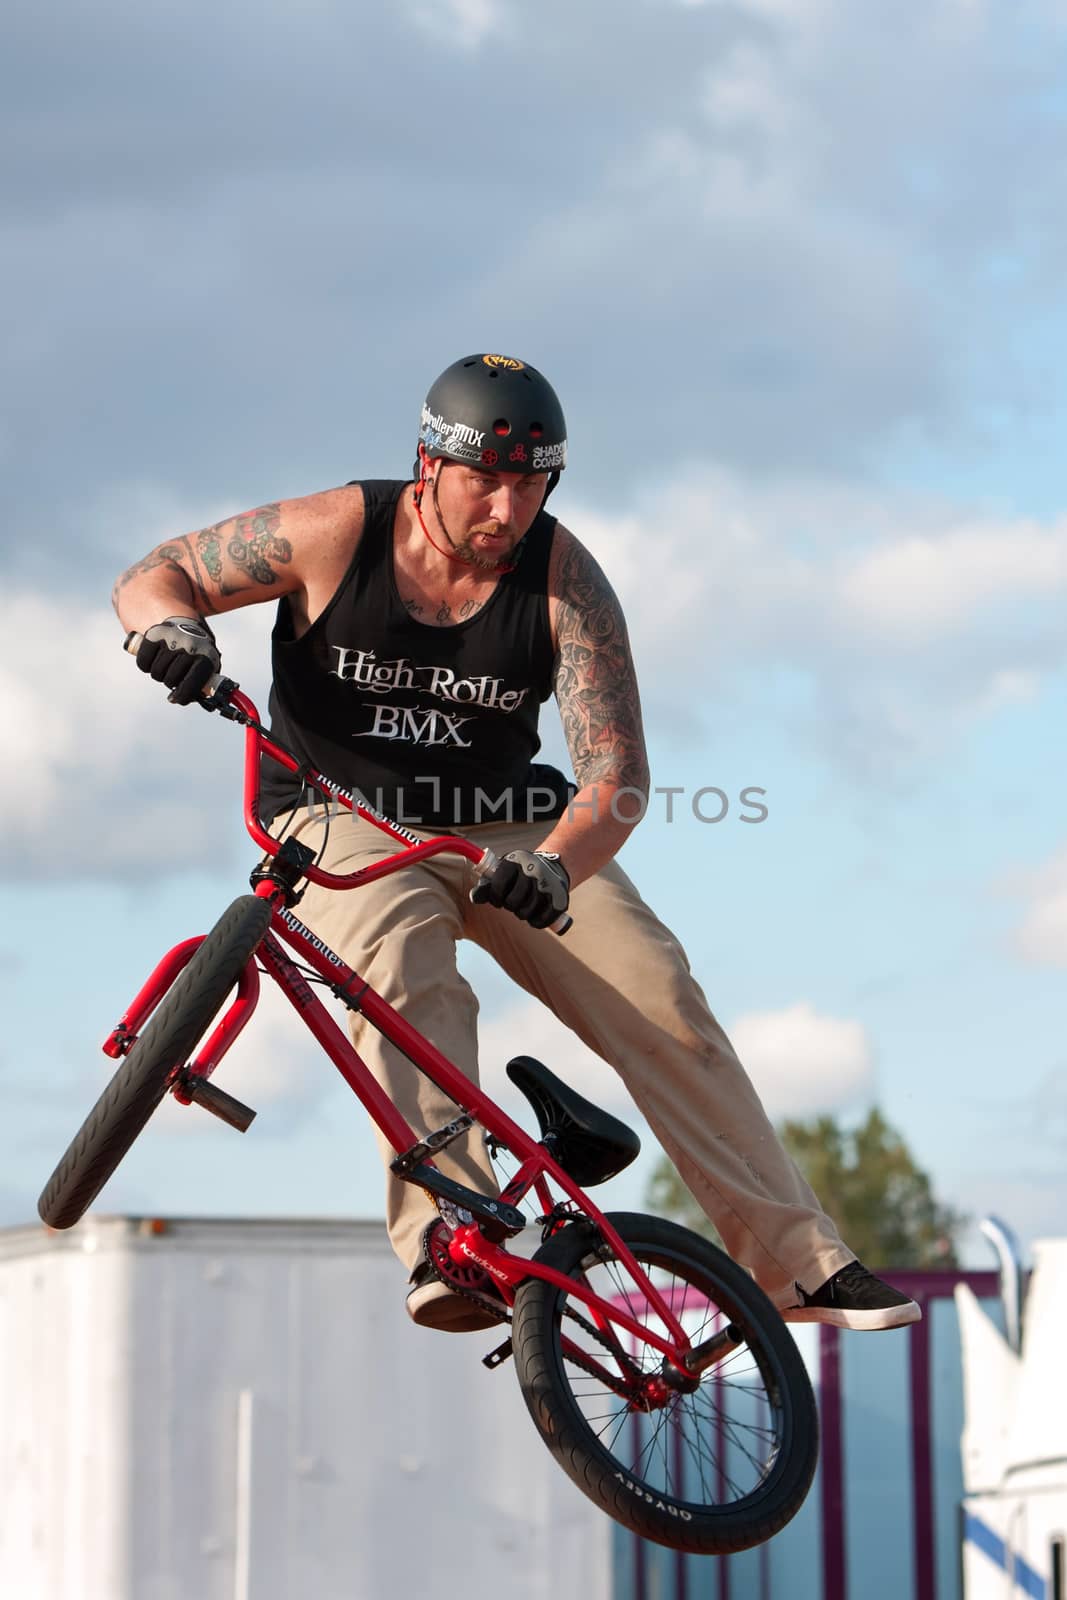 Man Spins His Bike In MidAir Performing At BMX Show by BluIz60